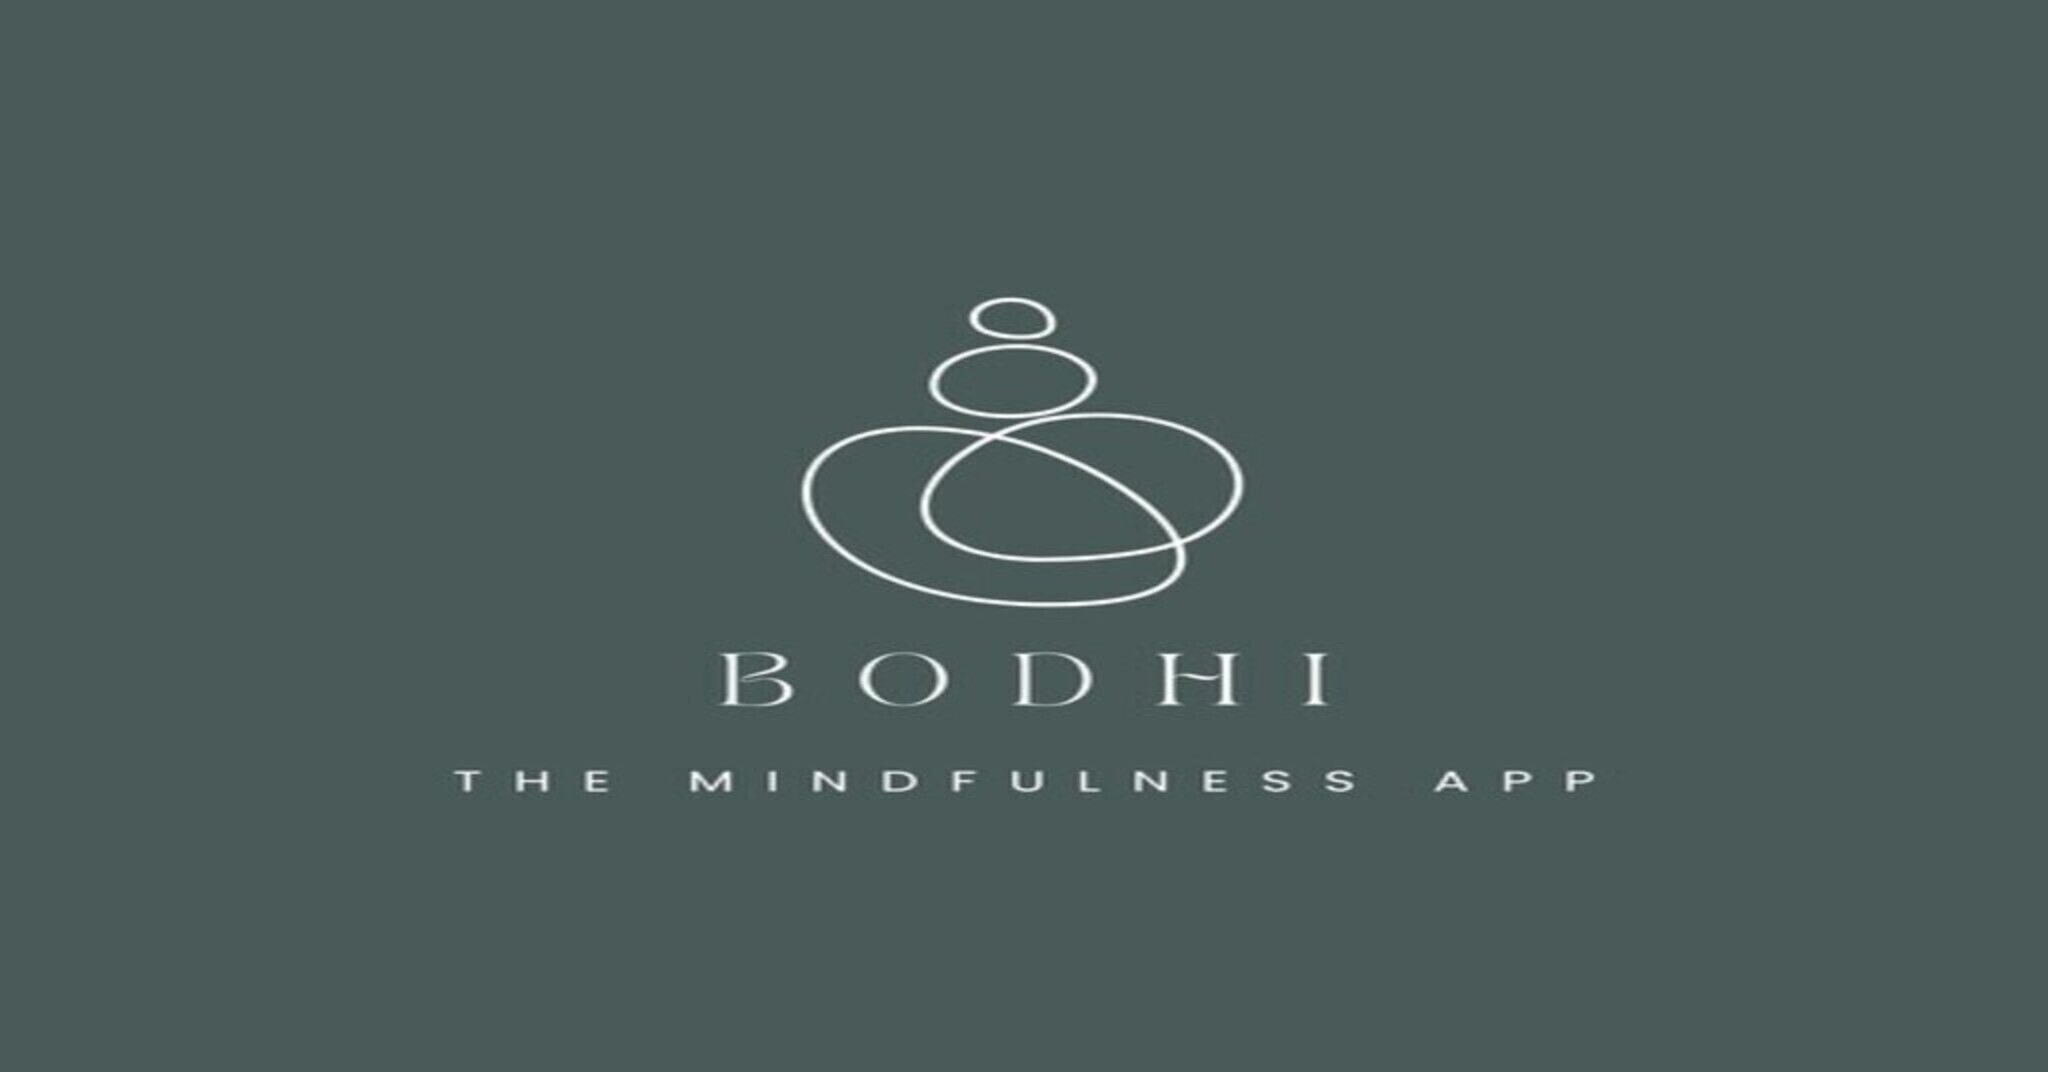 The bodhi app